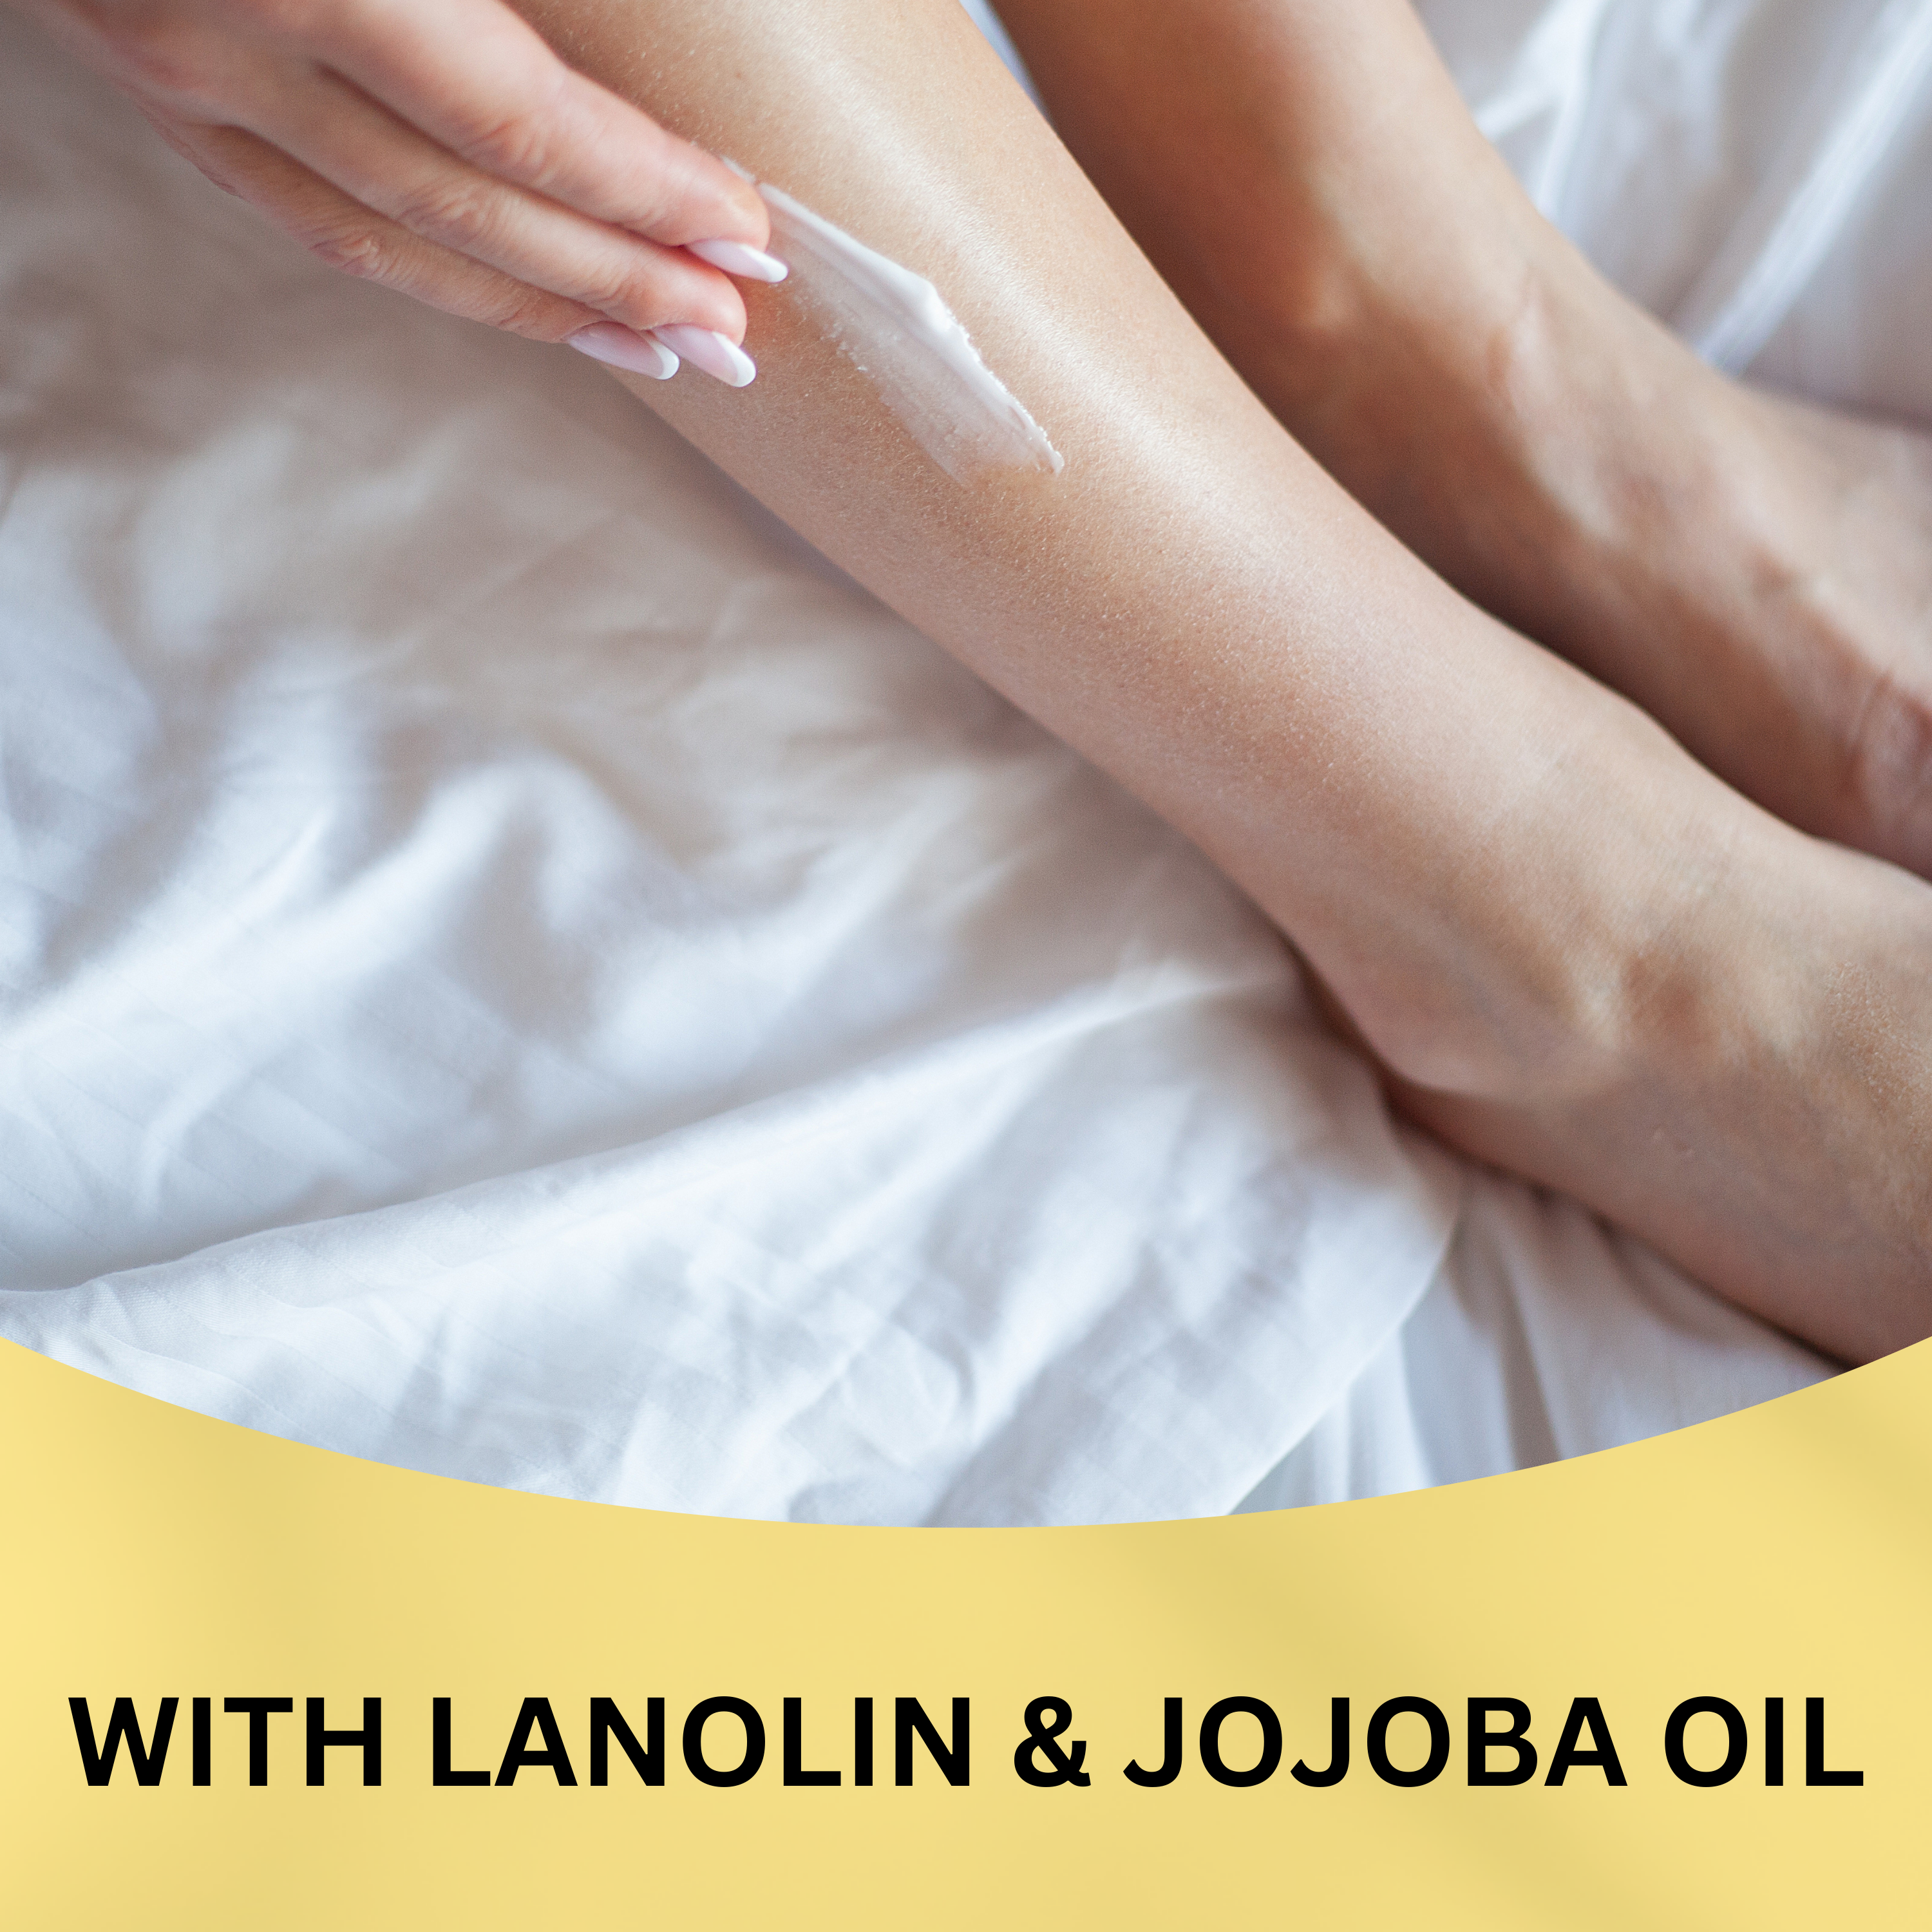 Black Canyon Vanilla Santal Scented Luxury Body Lotion with Lanolin and Jojoba Oil